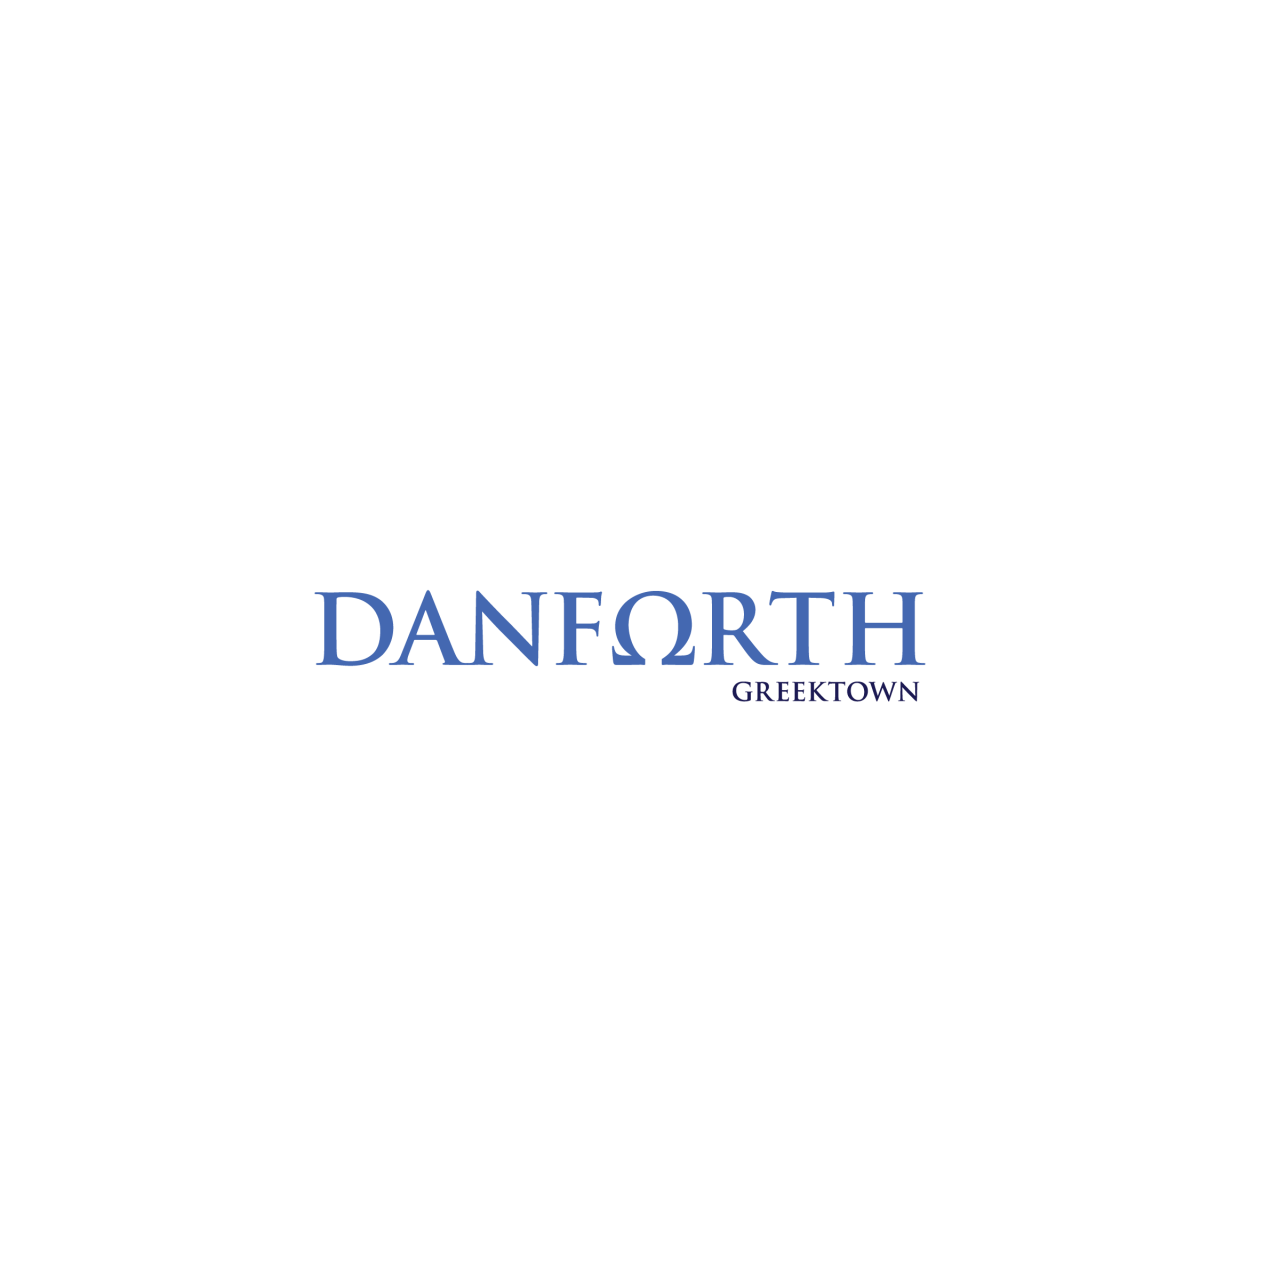 Image of Danforth Greektown logo